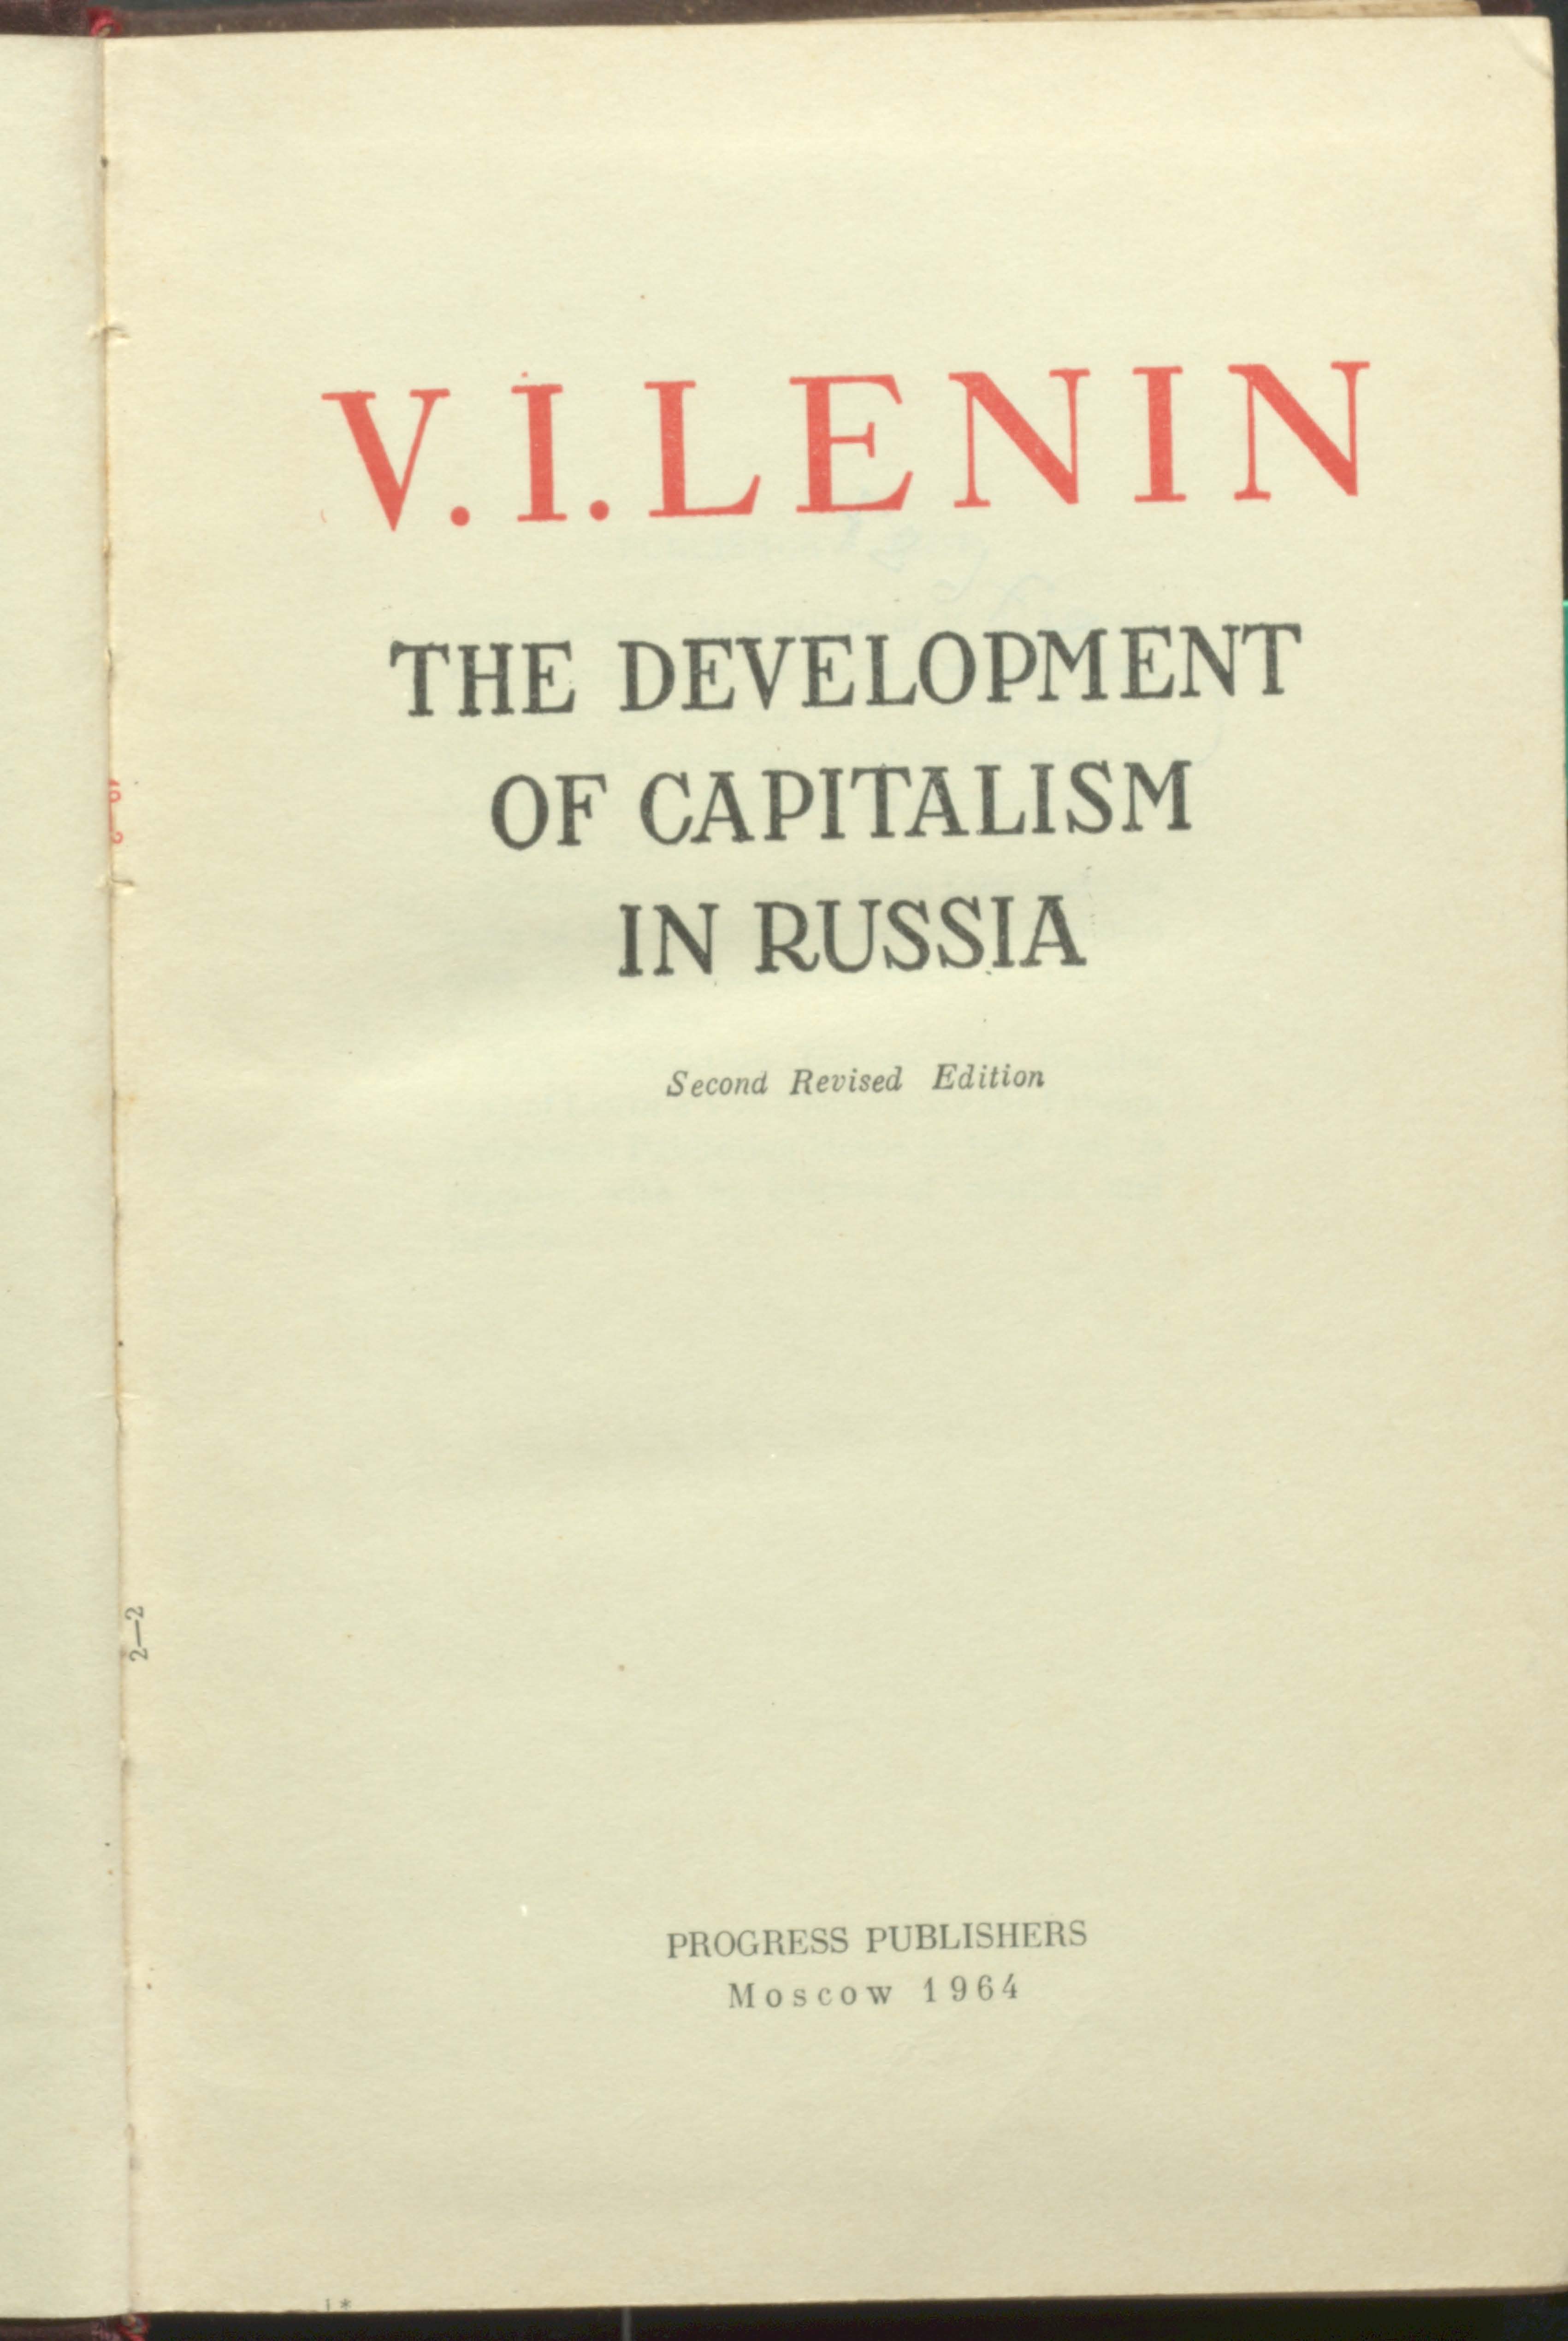 V.L.Lenin the development of capitalism in russia